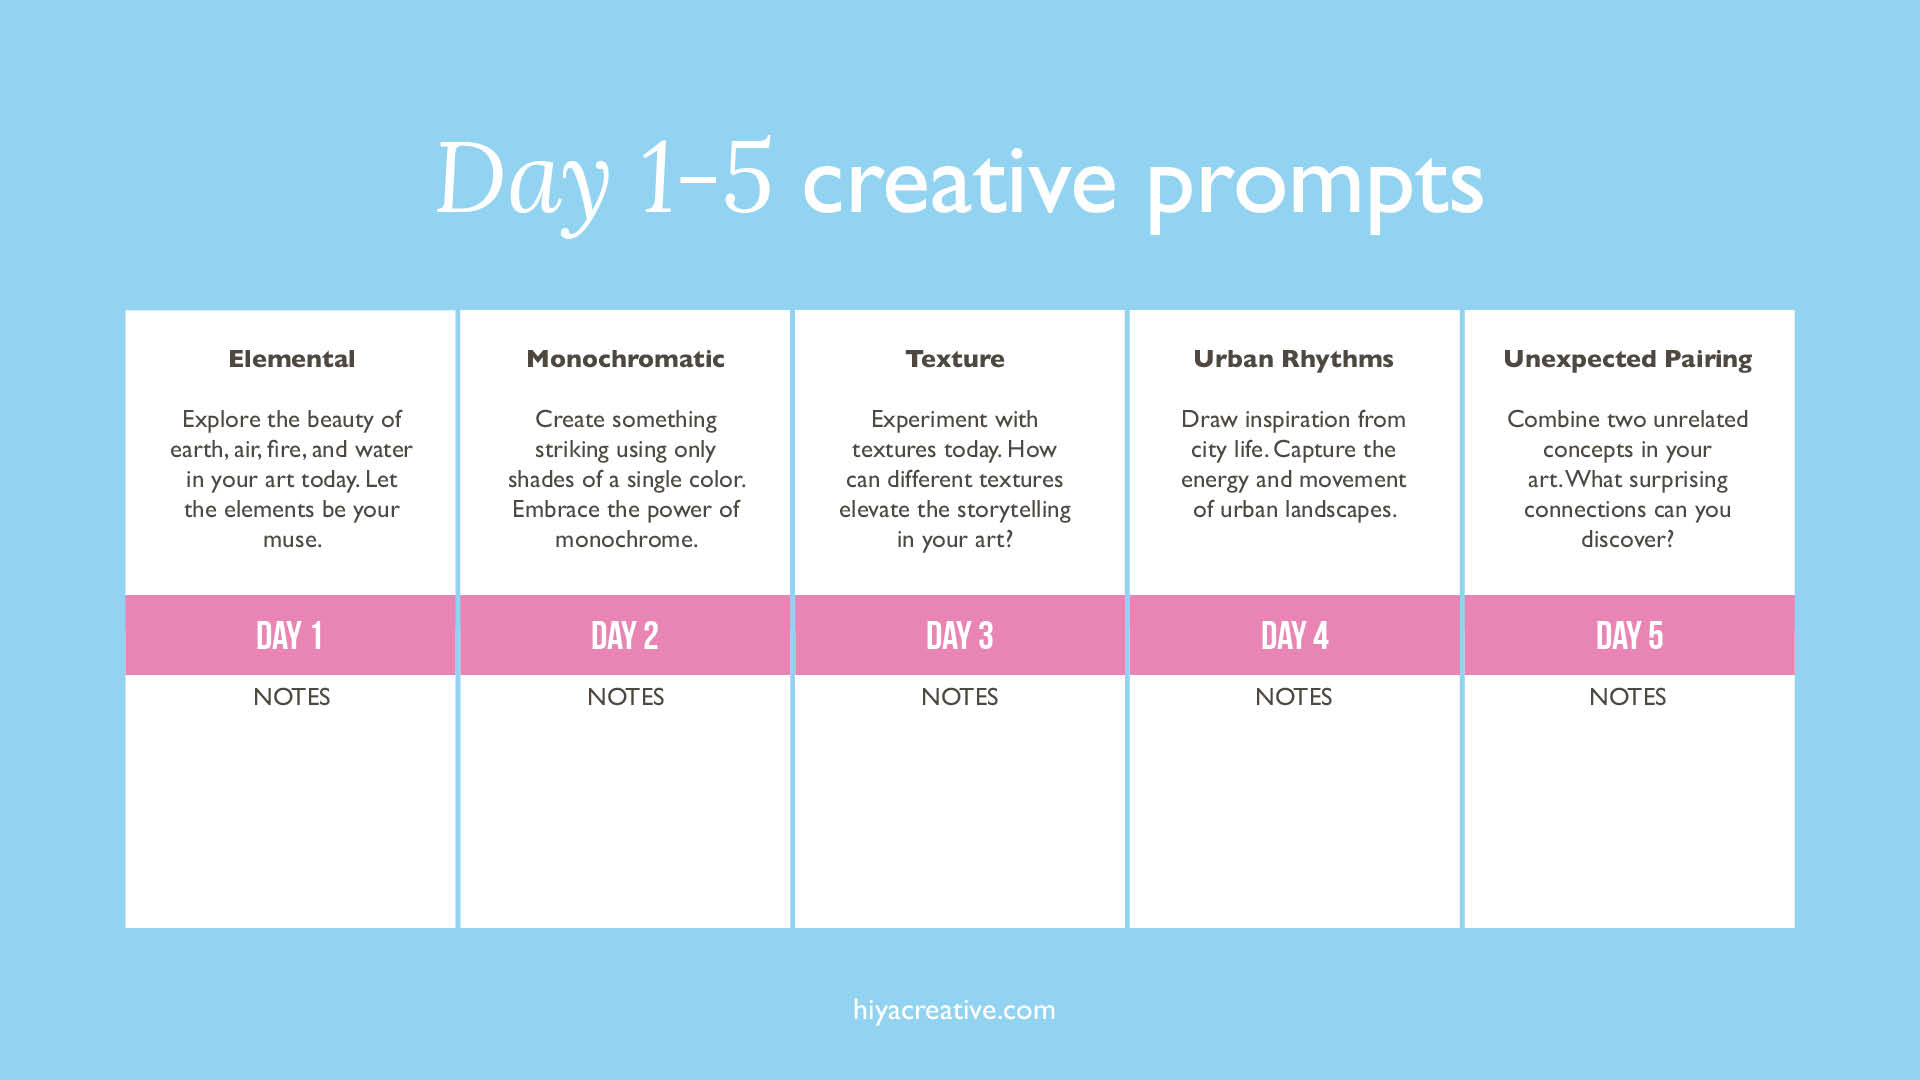 Free 30-Day Creative Prompts Calendar by HIYA CREATIVE